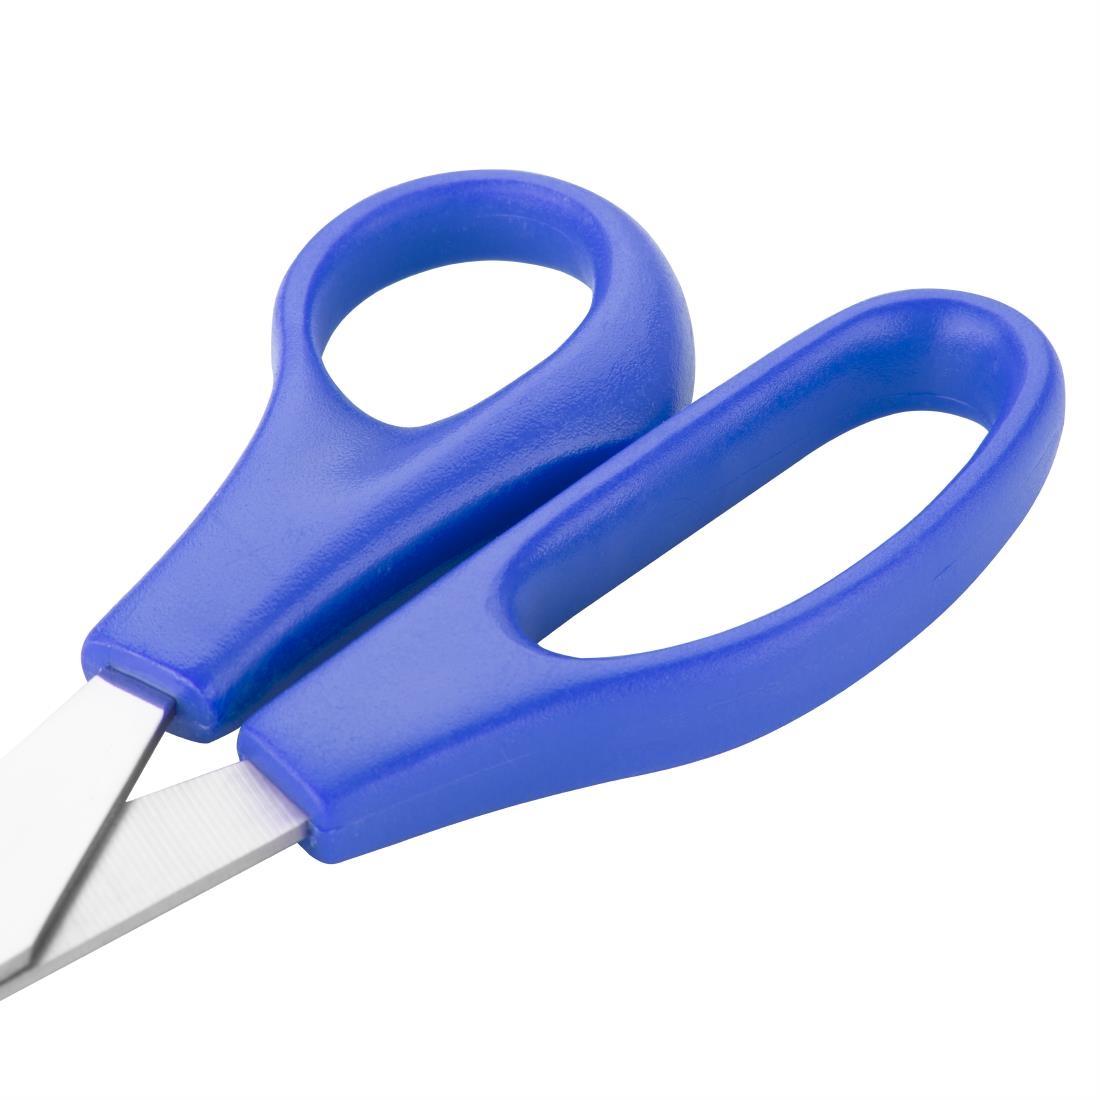 Hygiplas Blue Colour Coded Scissors - DM037  - 4